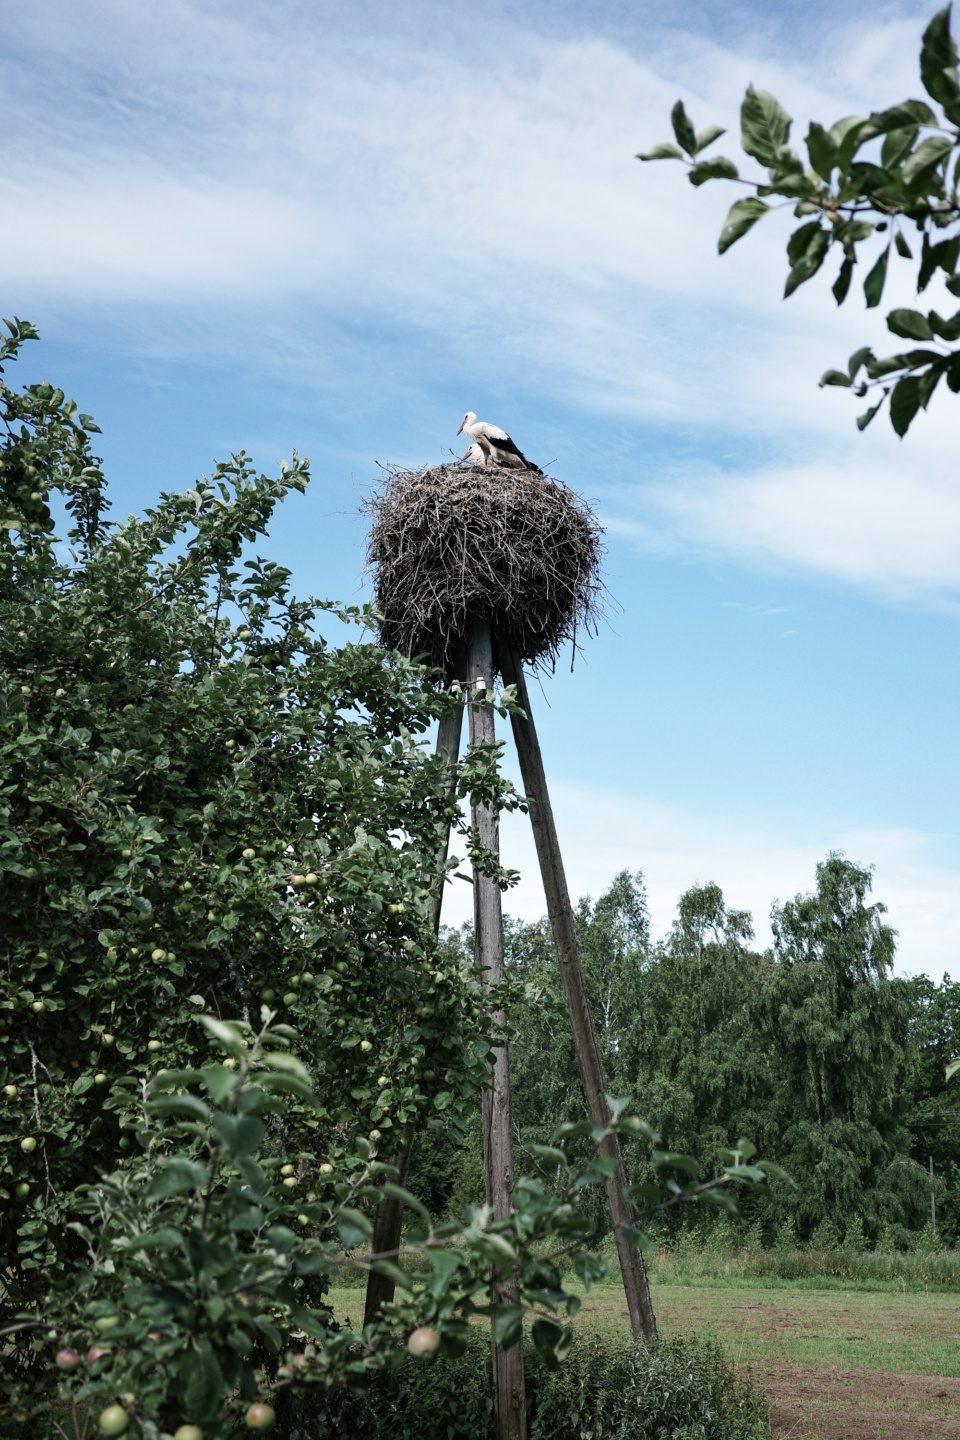 Stork's nest on a post